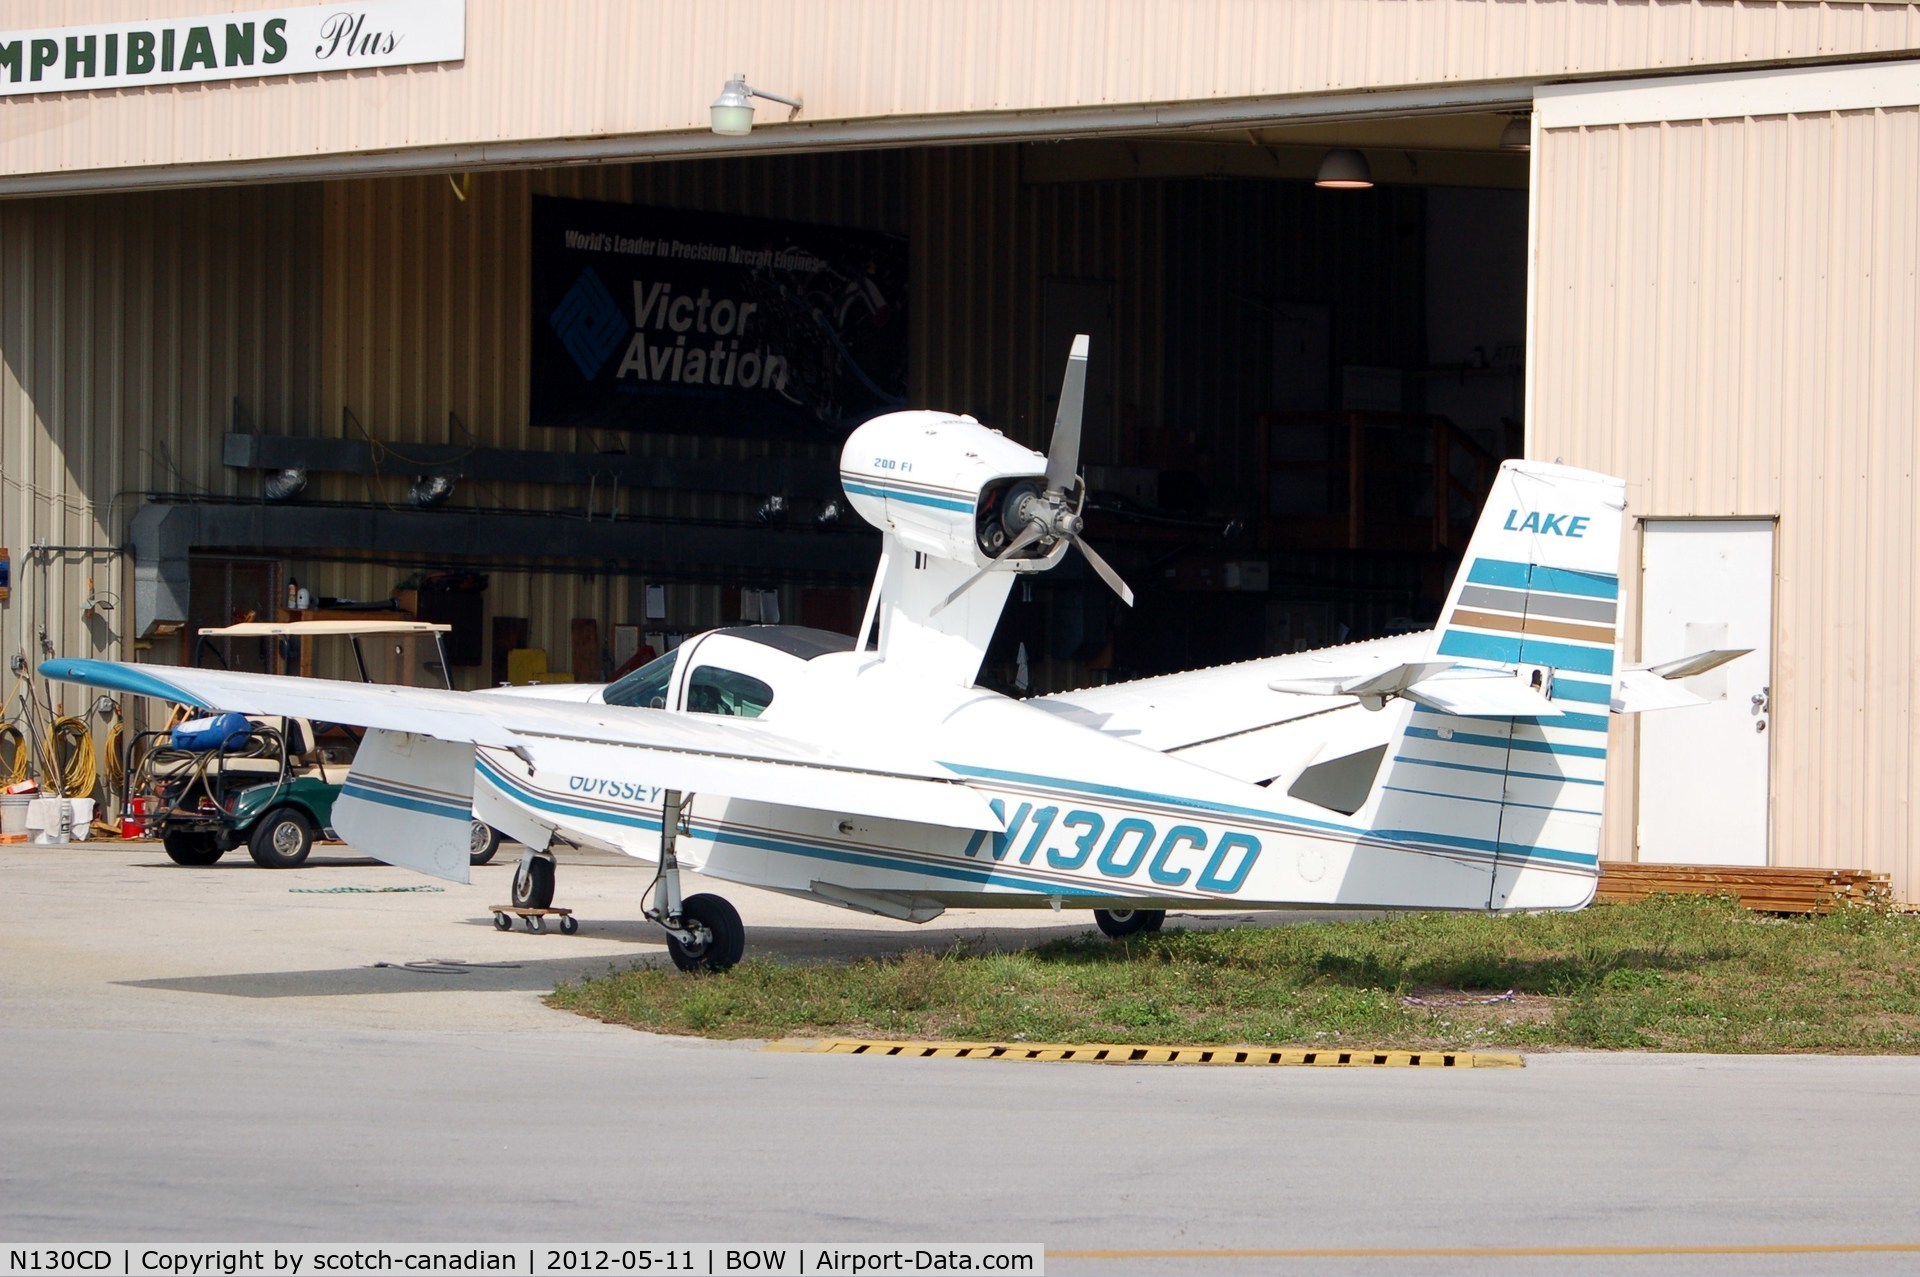 N130CD, Lake LA-4-200 Buccaneer Buccaneer C/N 1056, Consolidated Aeronautics Inc. LAKE LA-4-200 N130CD at Bartow Municipal Airport, Bartow, FL 